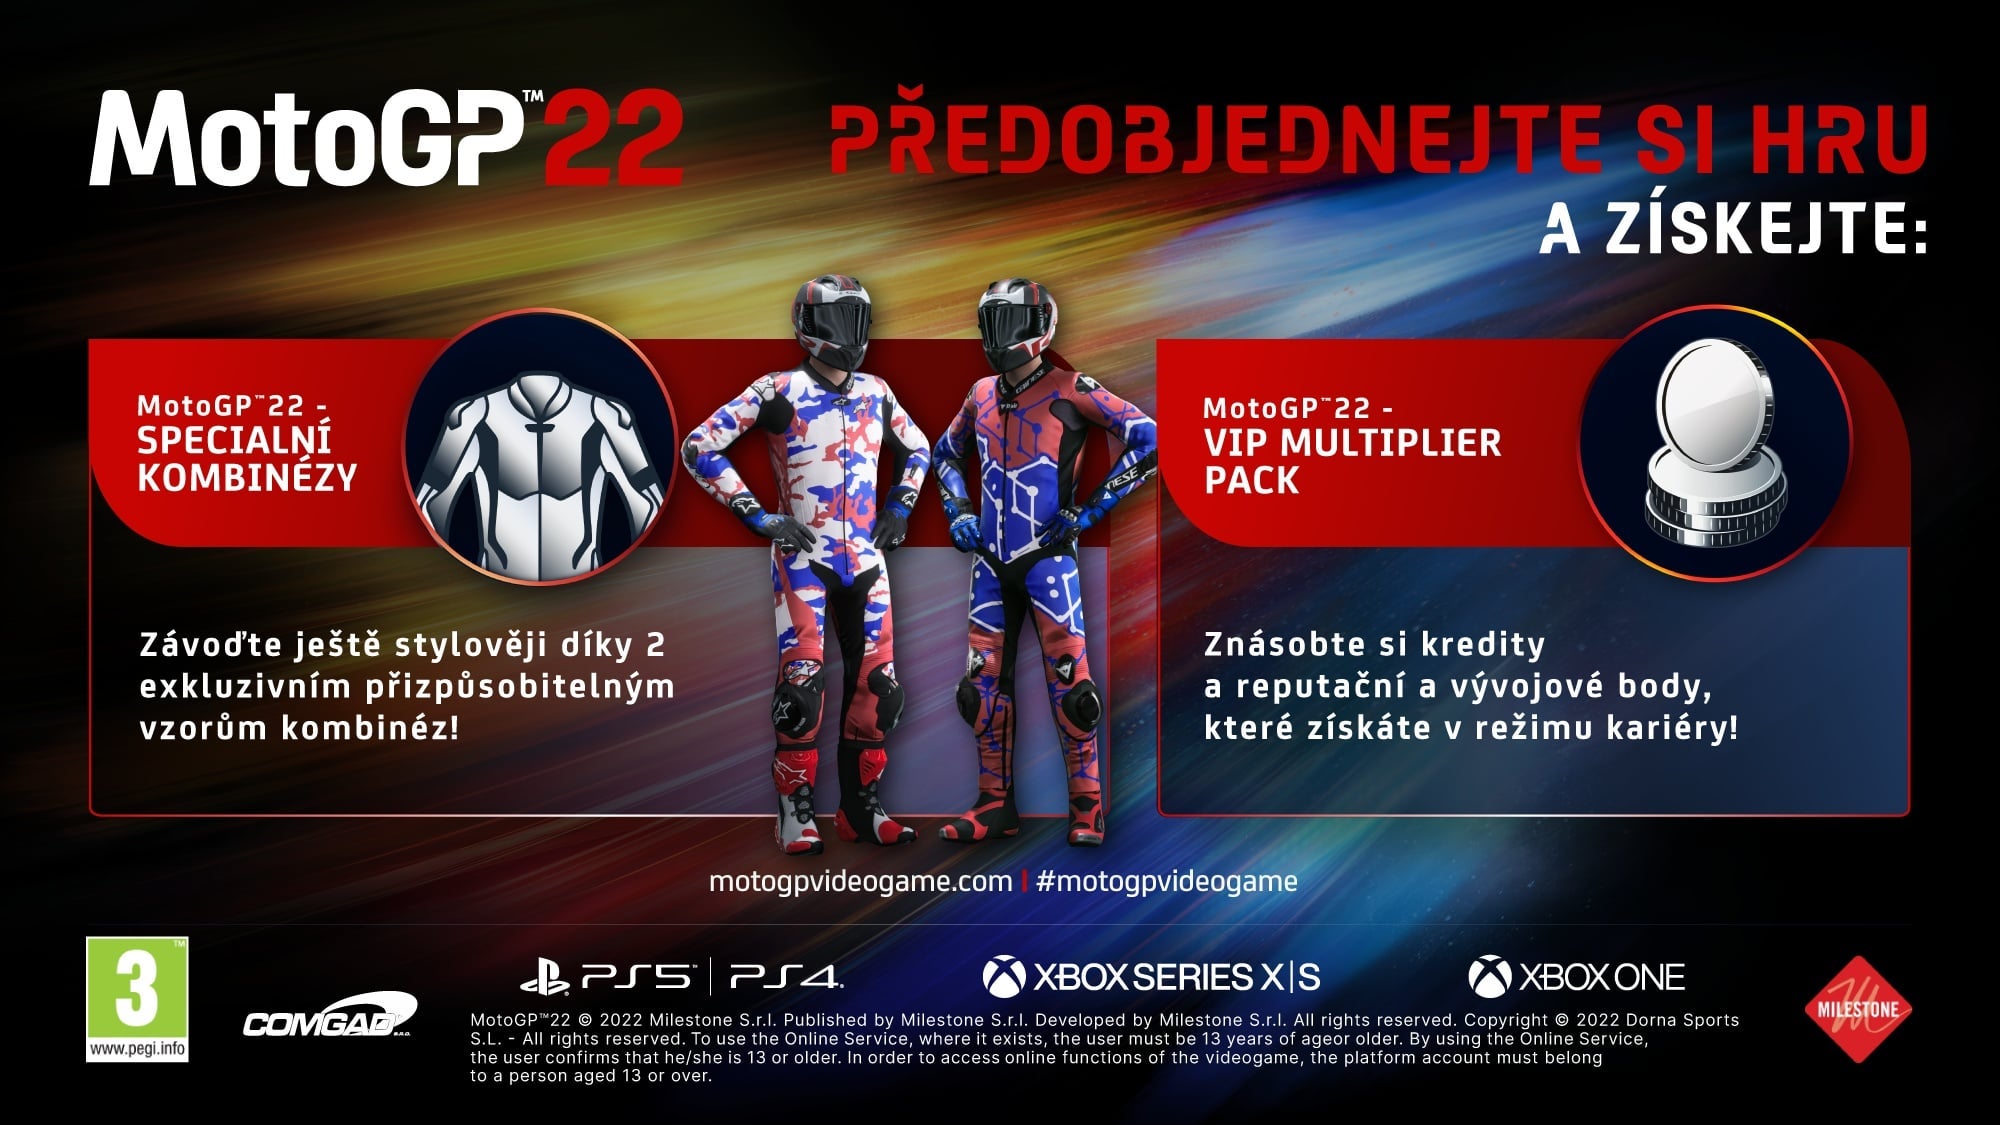 Image for Dva bonusy k MotoGP 22